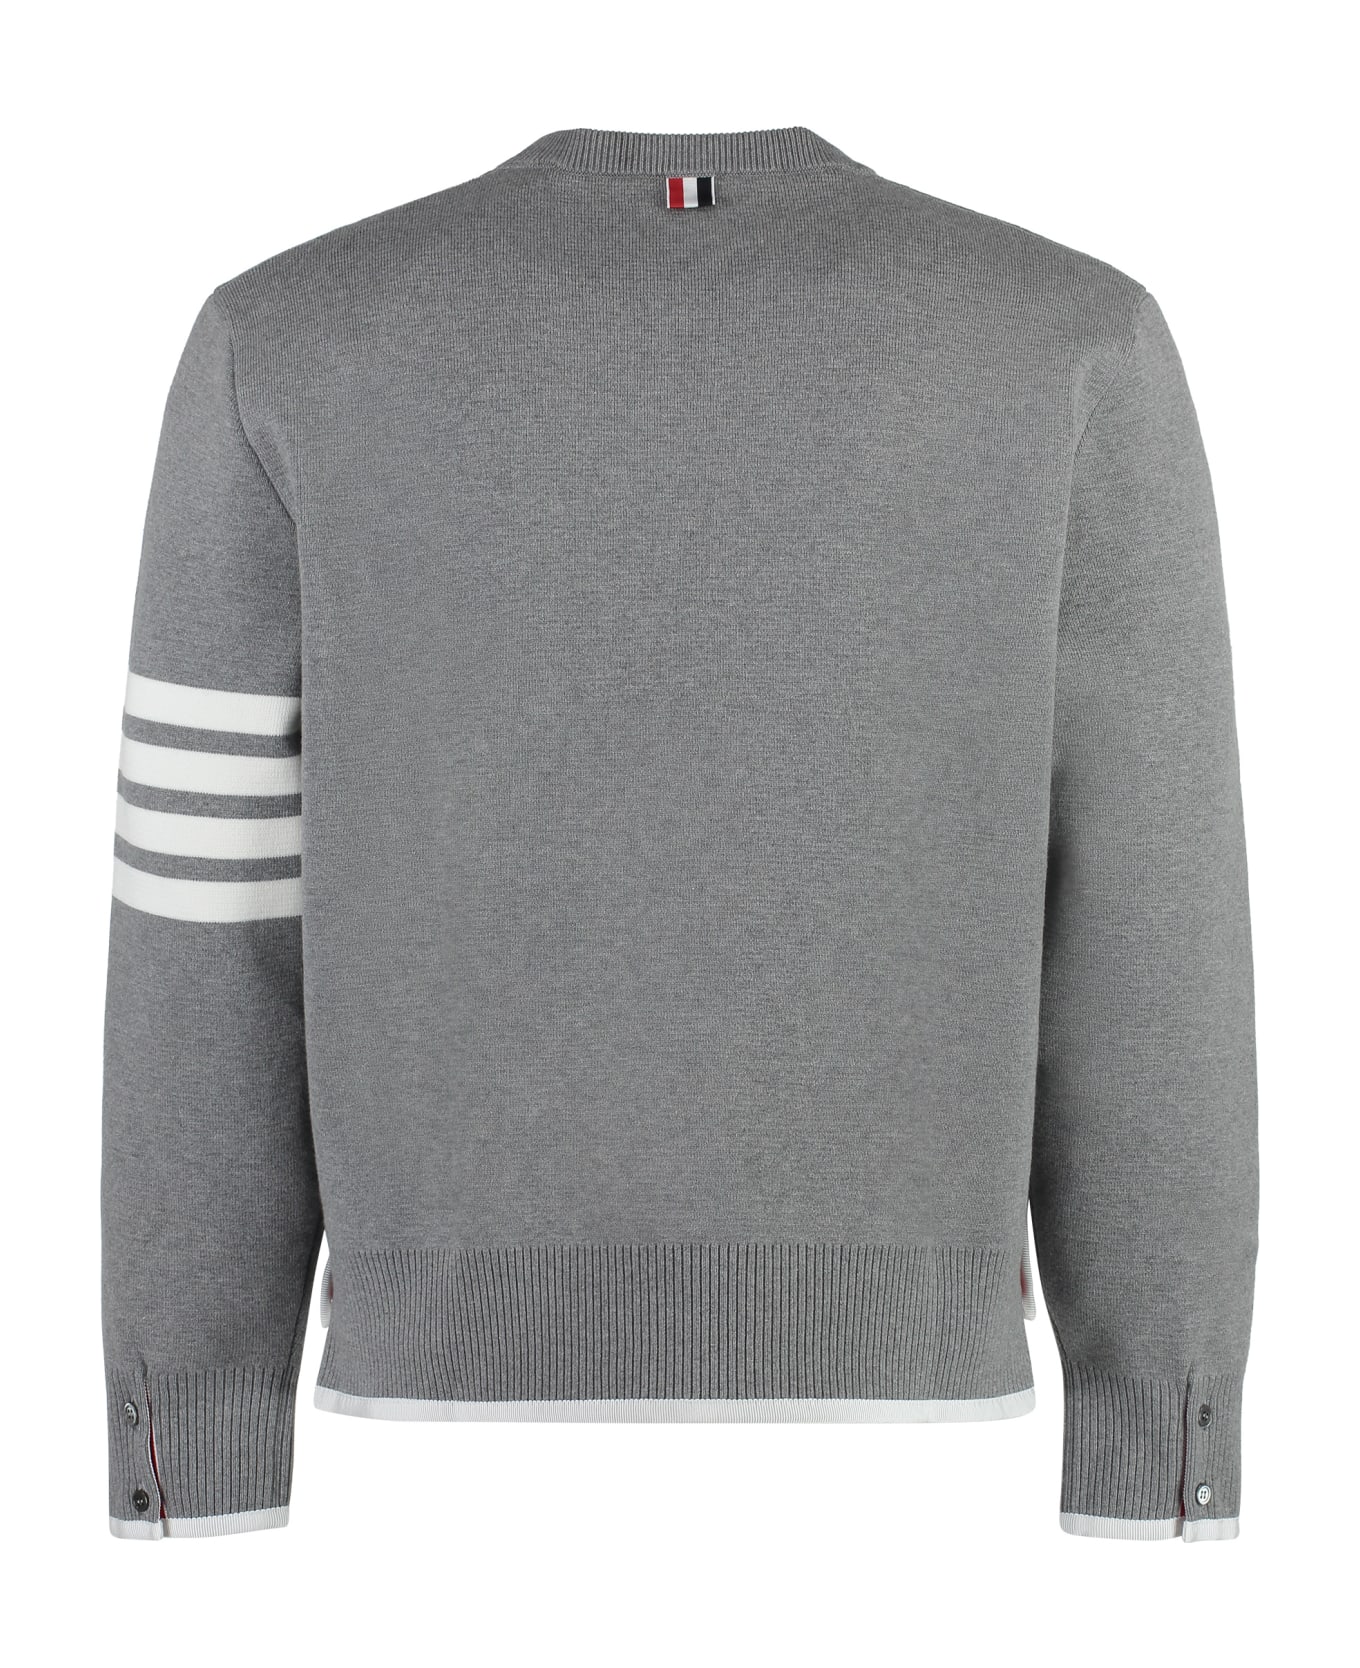 Thom Browne Cotton Crew-neck Sweater - grey ニットウェア